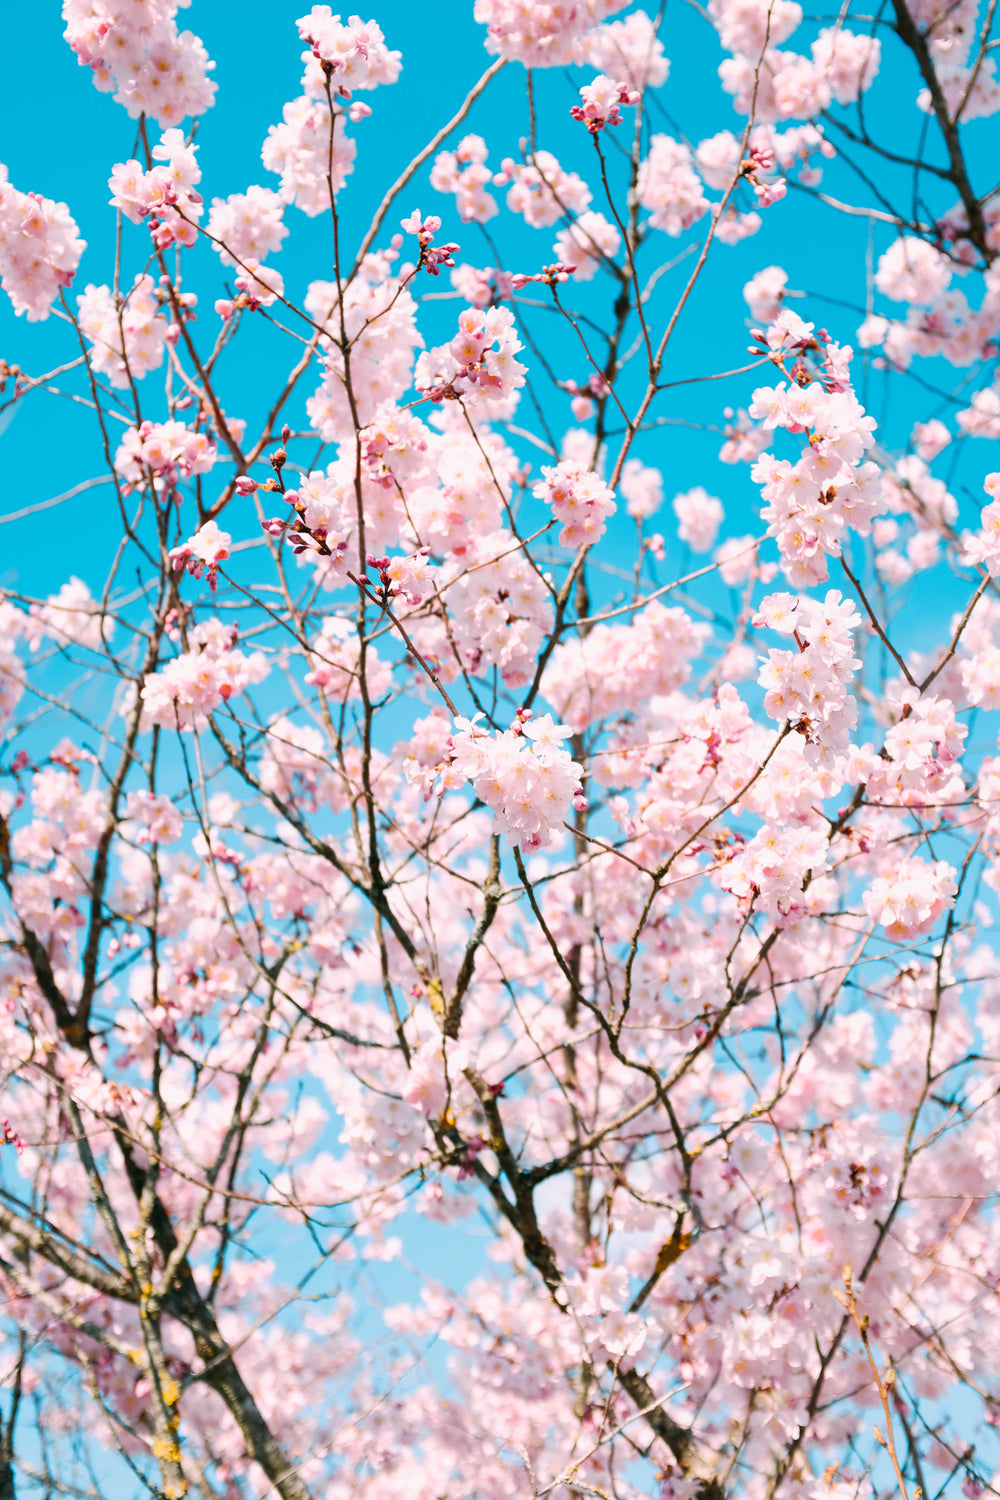 Fashion Wallpaper. Pink Flowers Aesthetics. Cherry Blossom Tree